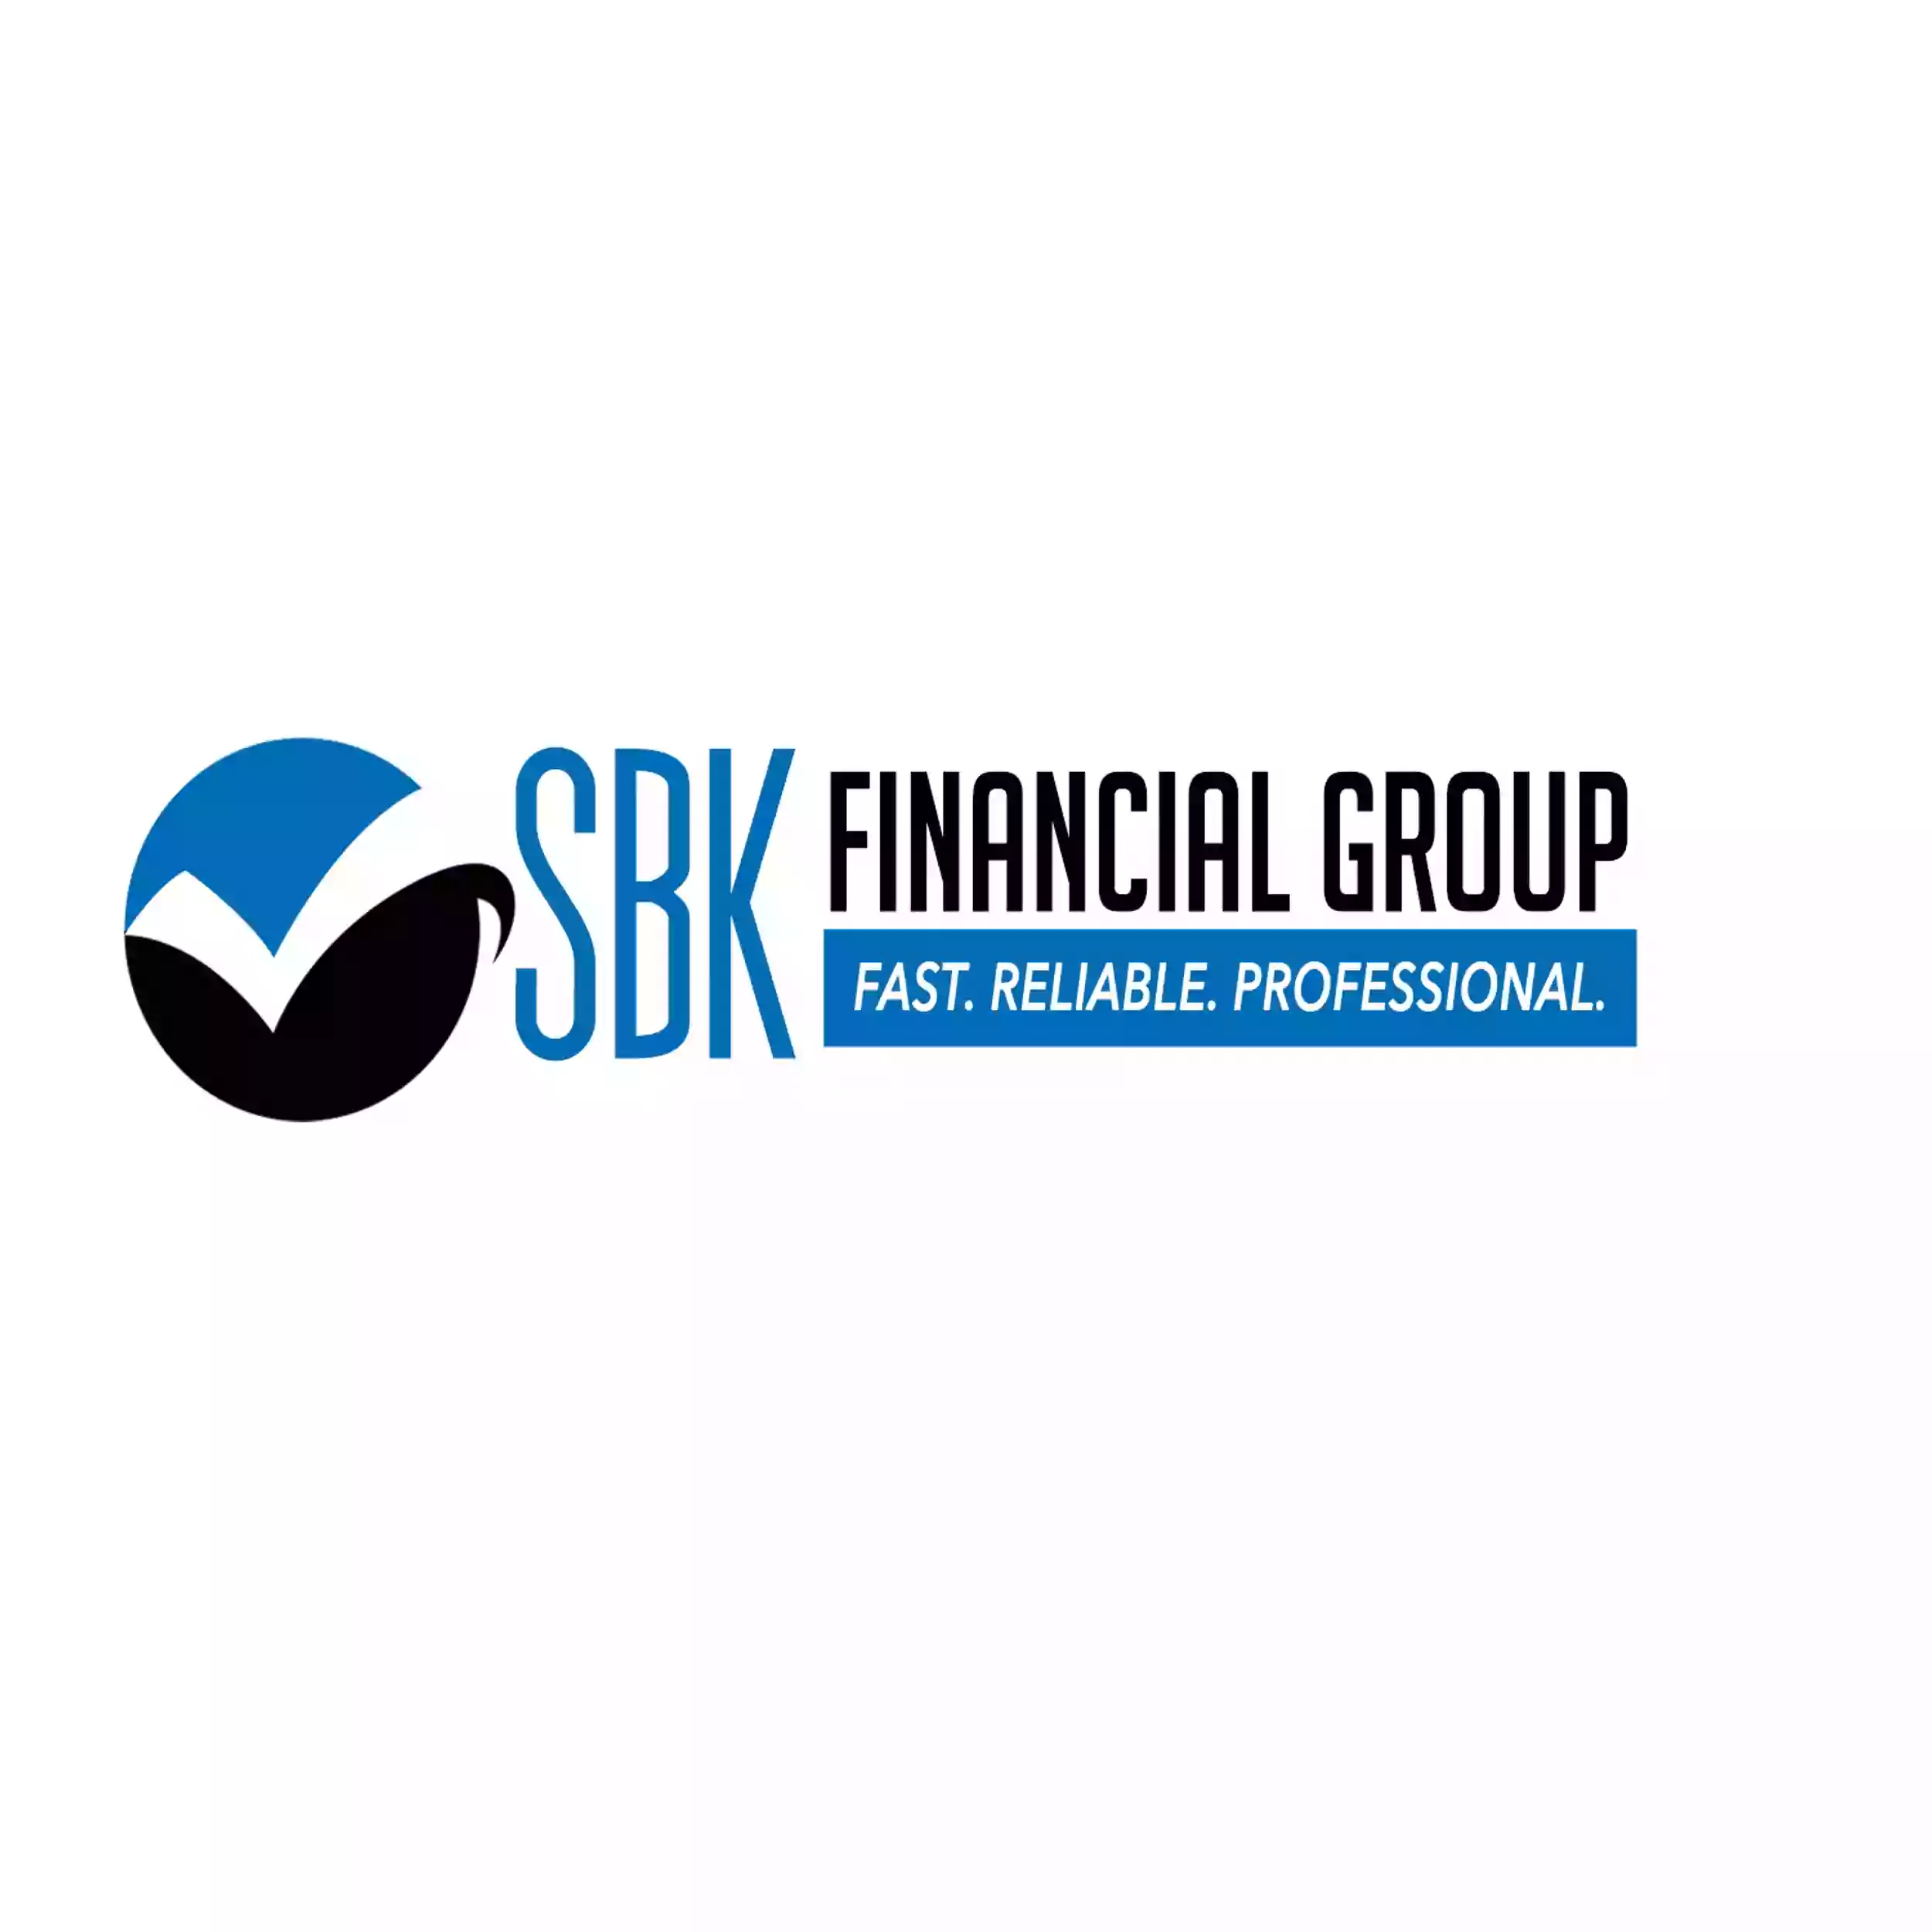 SBK Financial Group